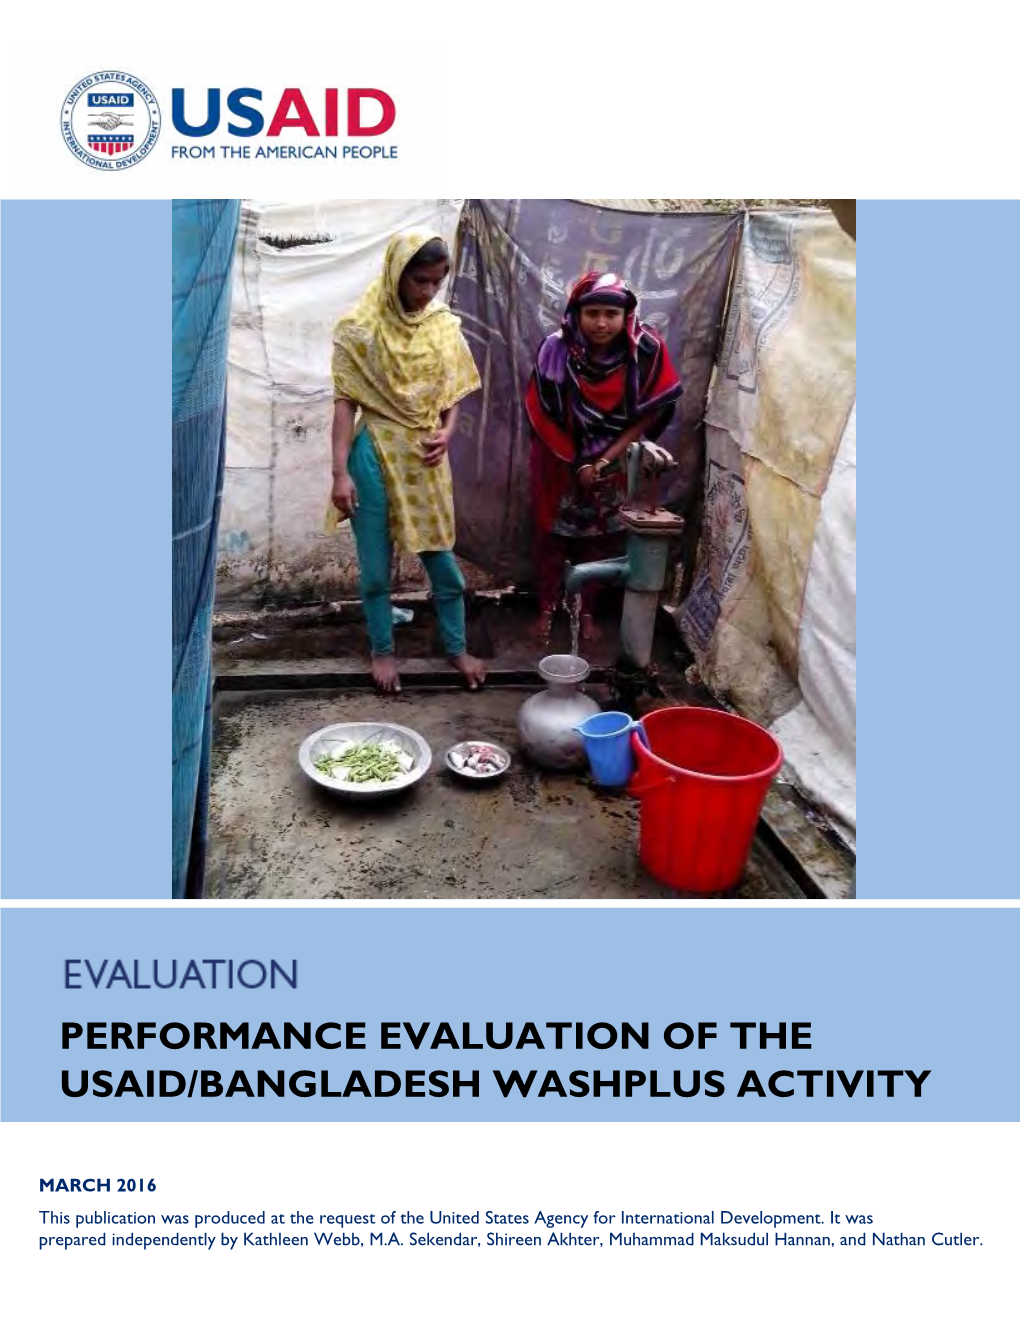 Performance Evaluation of the Usaid/Bangladesh Washplus Activity